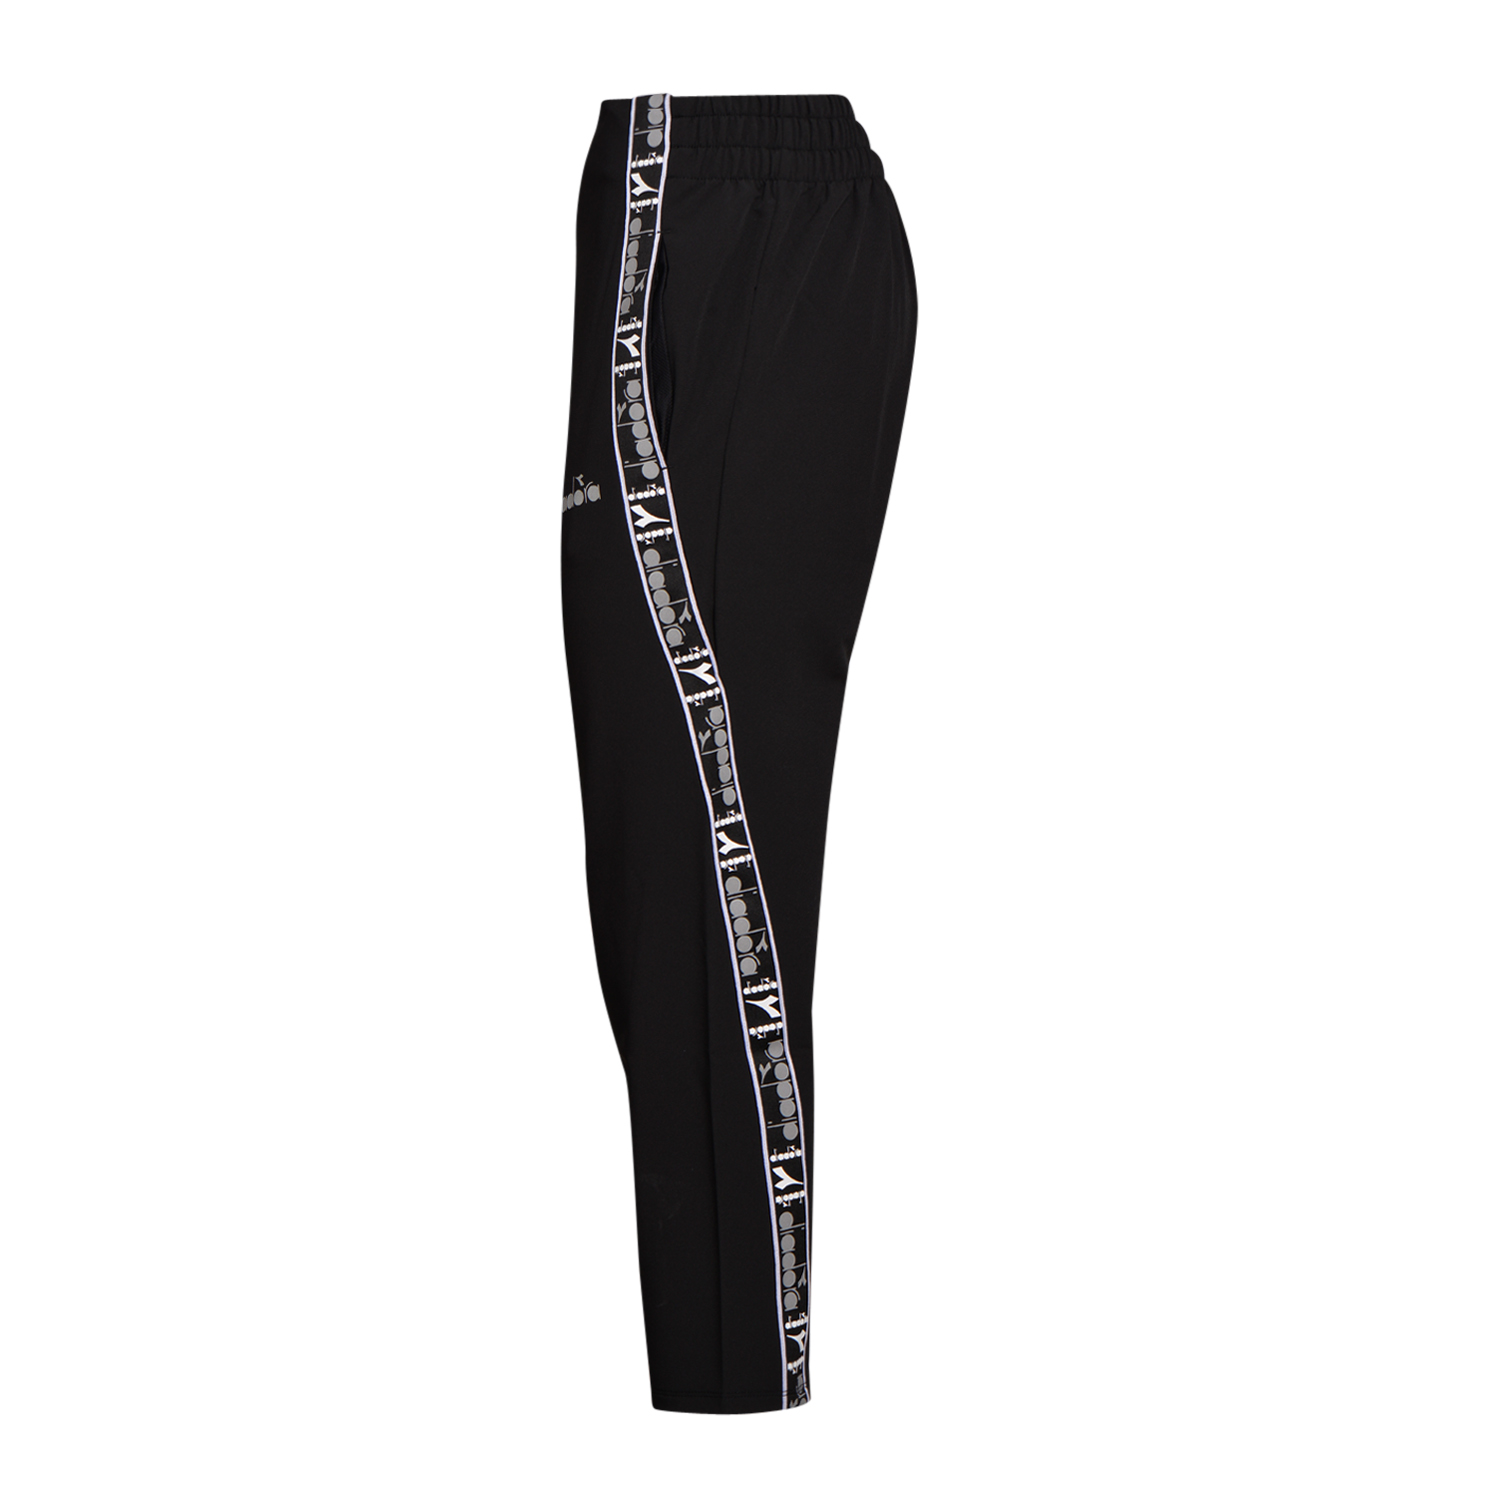 Diadora-pants sport l. 7/8 running pants be one womens | eBay